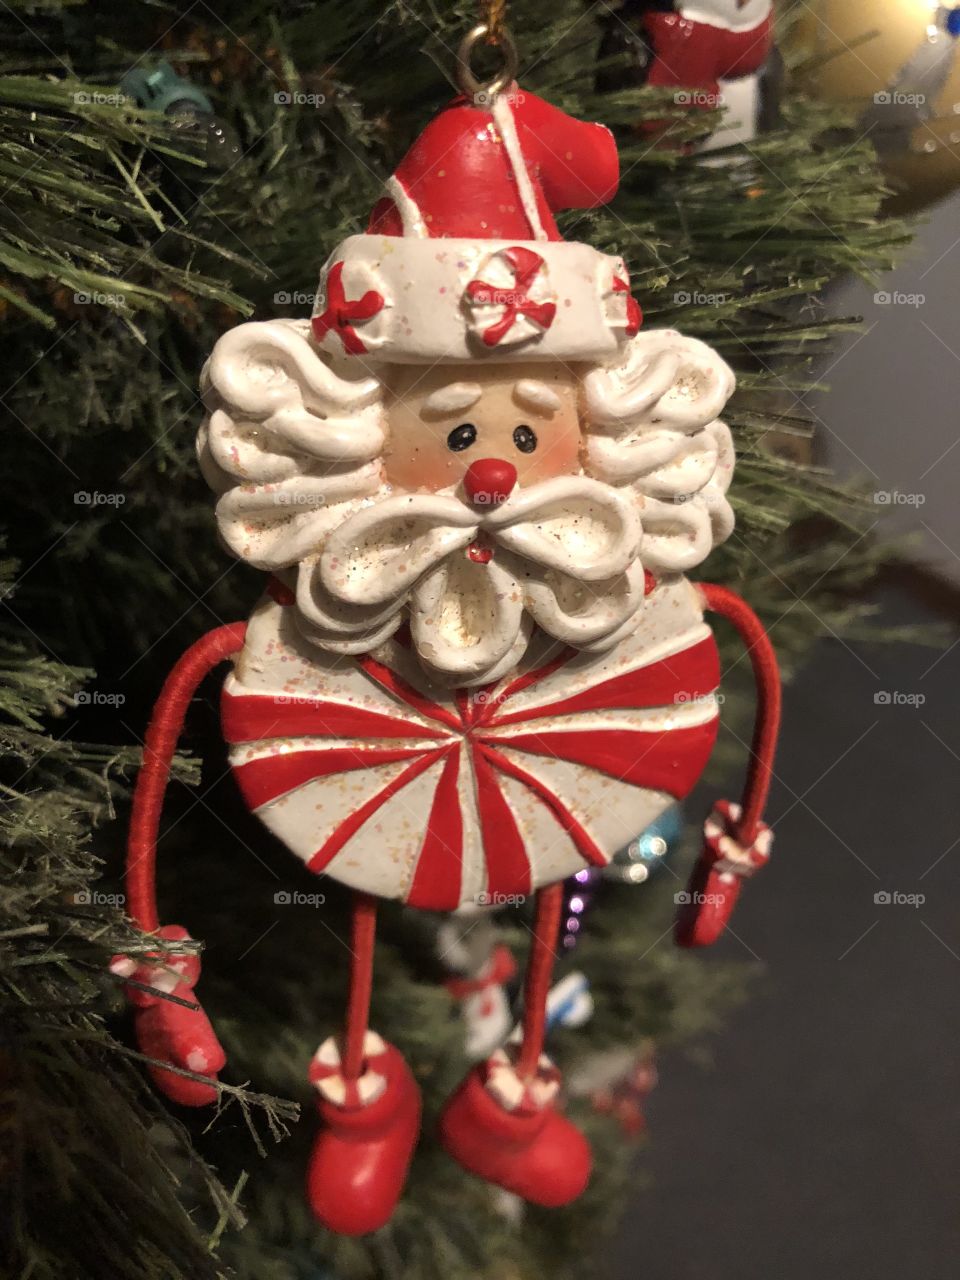 Santa Clause ornament Christmas decorations decor 